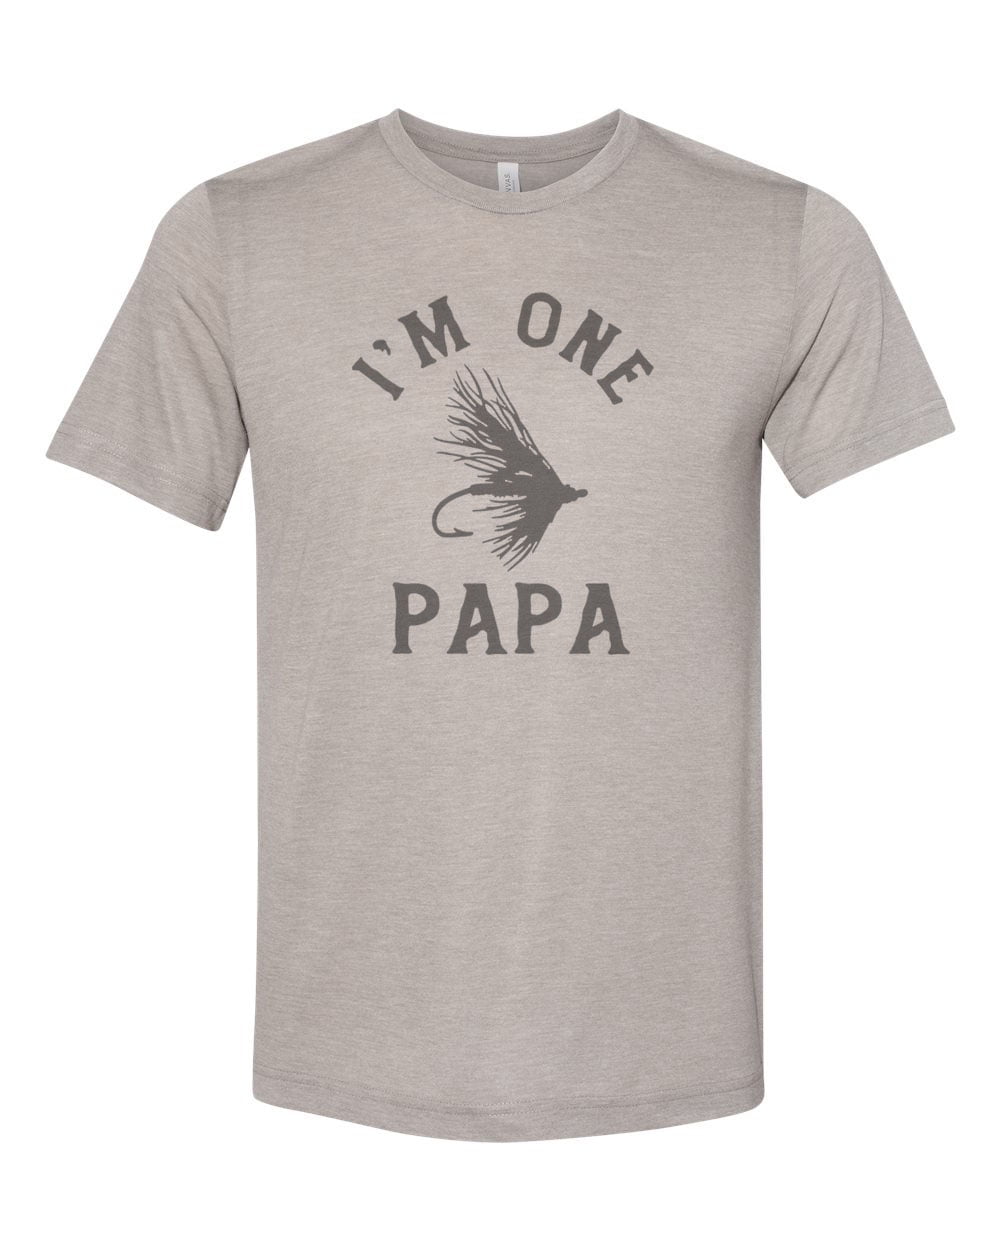 Grandpa Fishing Buddy Shirt, Gift for Grandpa, Grandpa Fishing